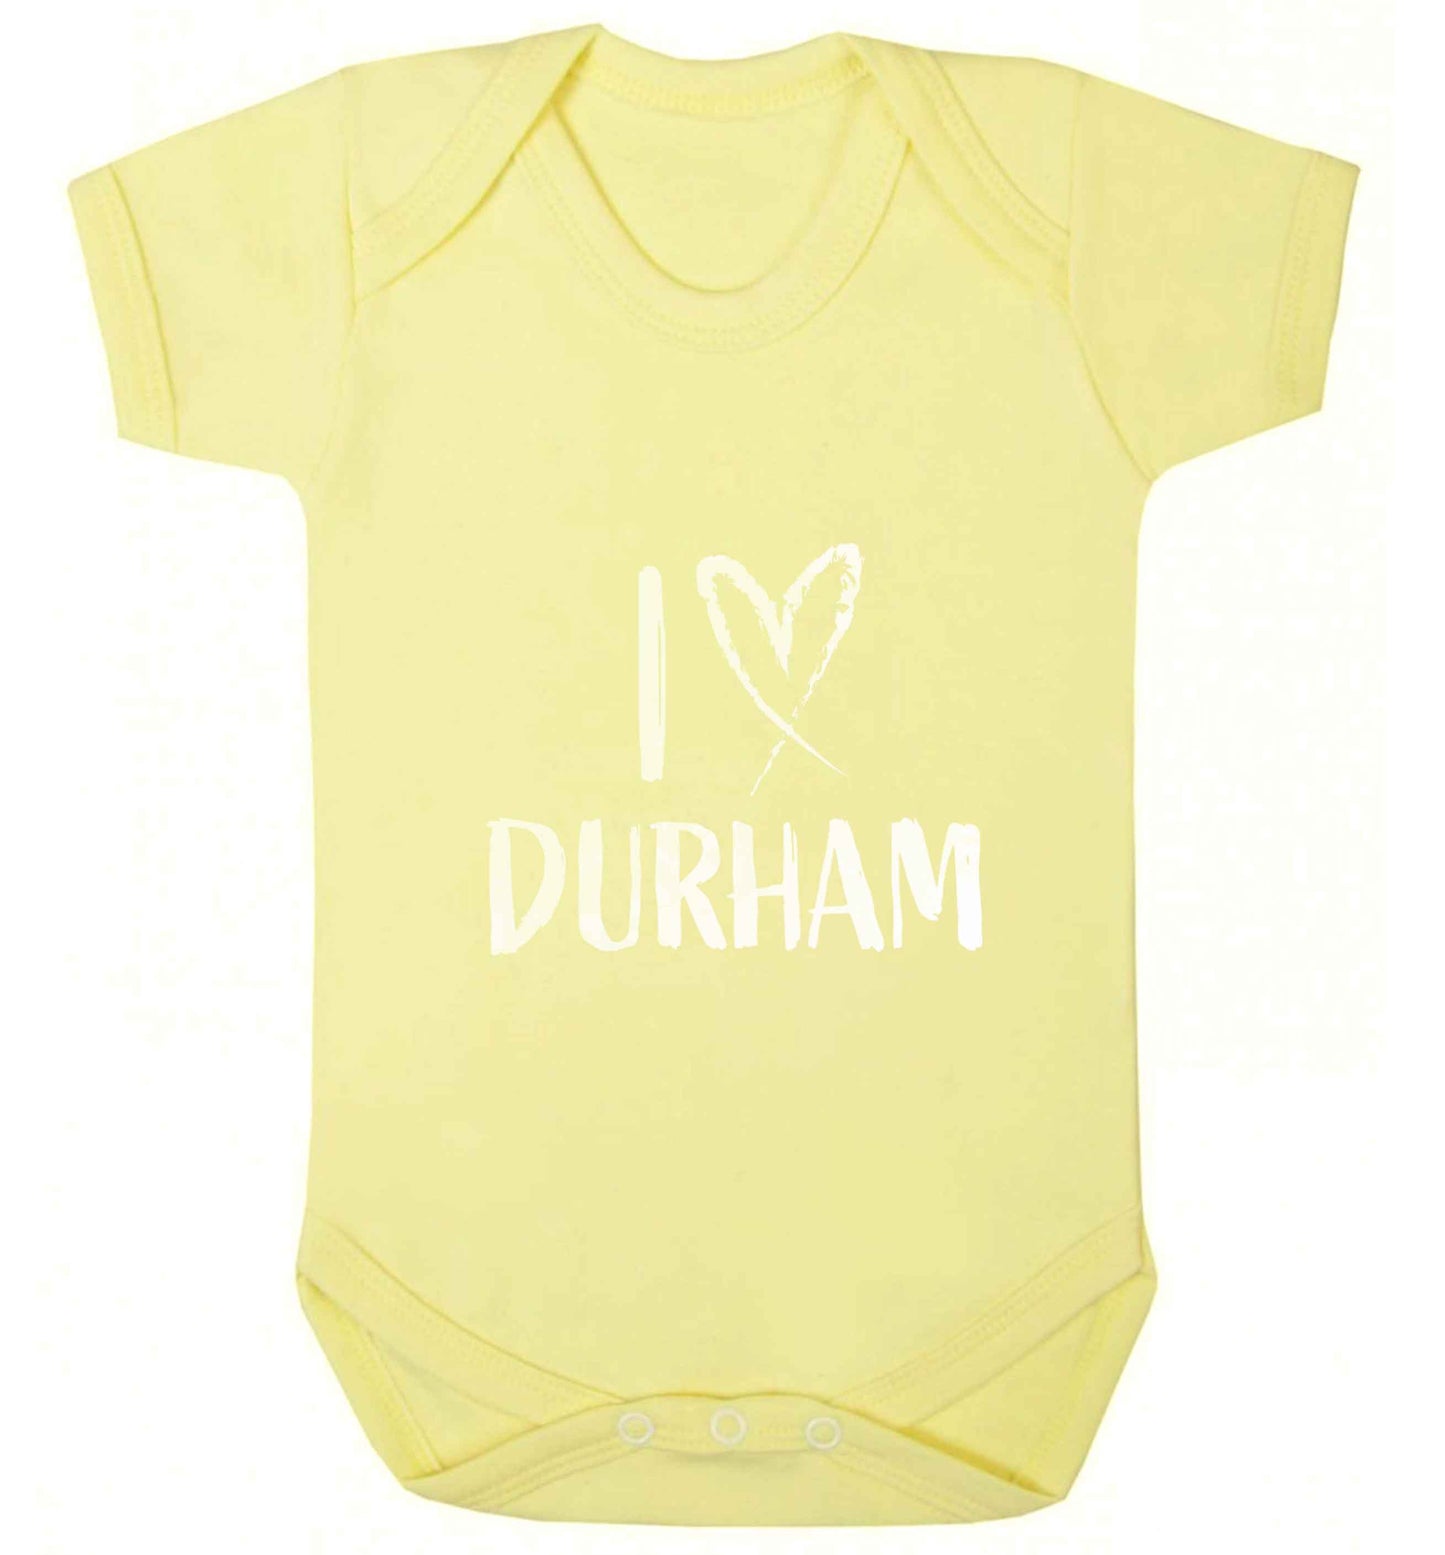 I love Durham baby vest pale yellow 18-24 months